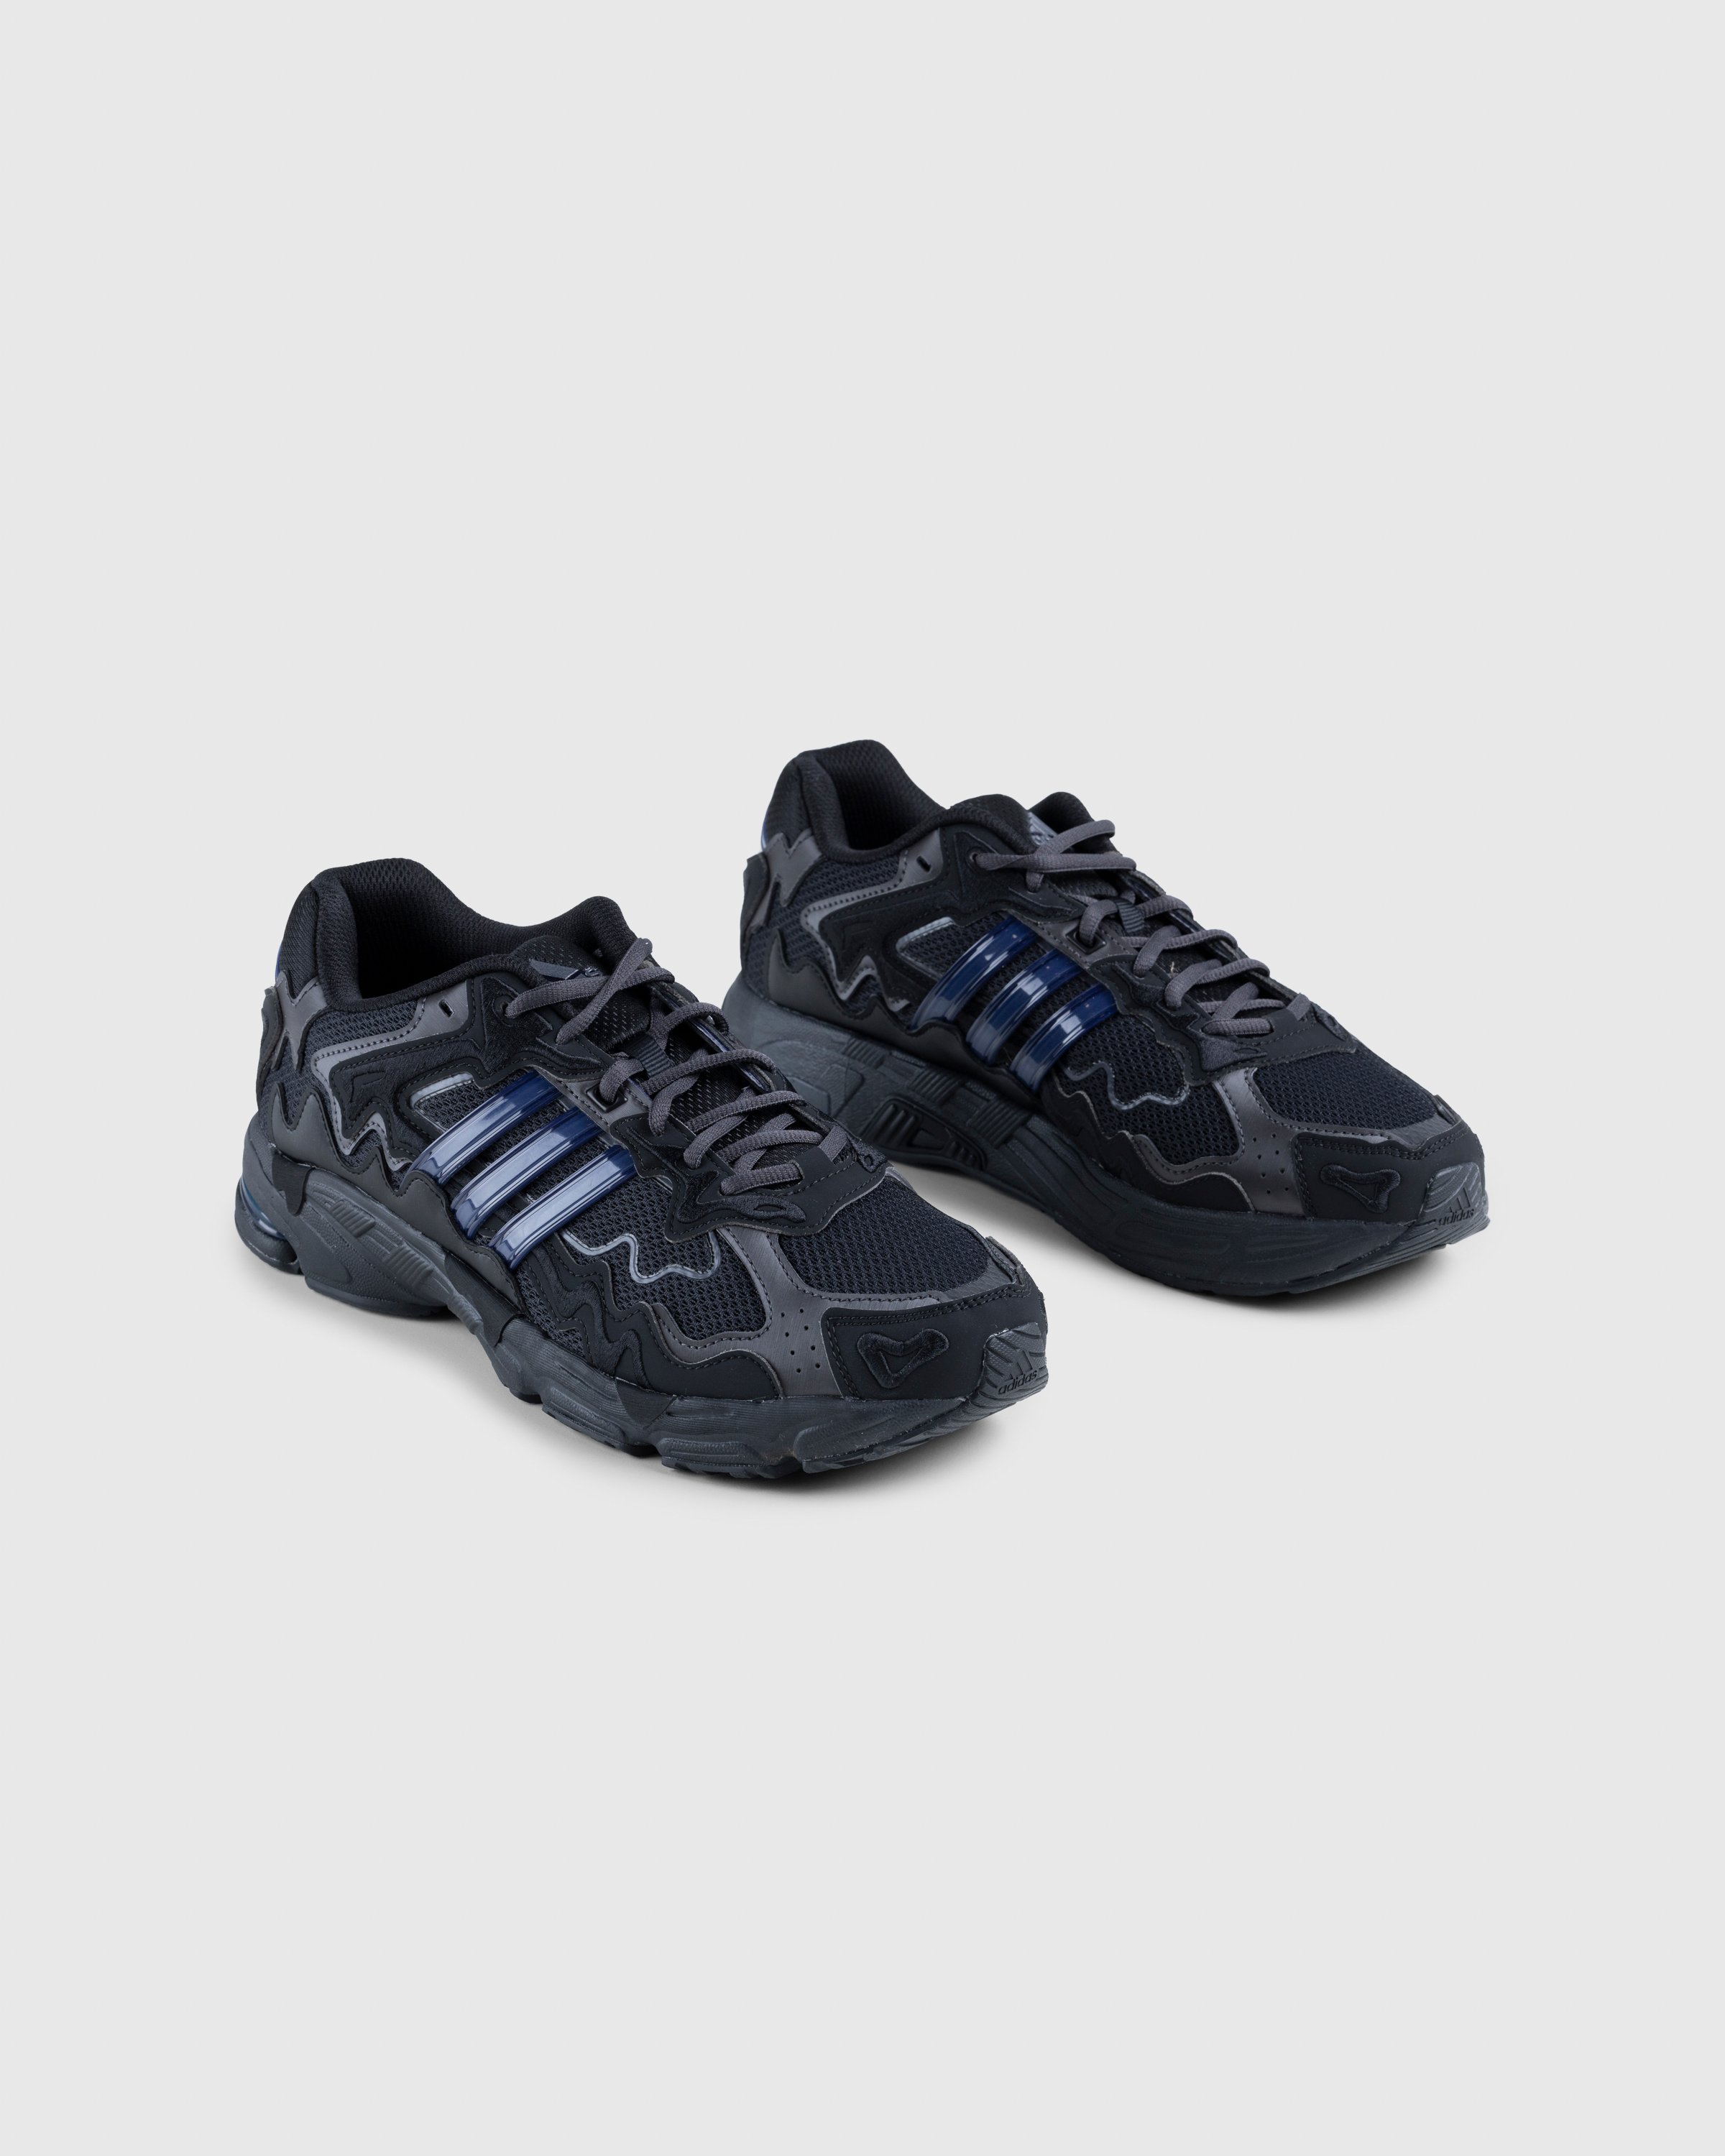 Adidas x Bad Bunny - Response Black - Footwear - Black - Image 3